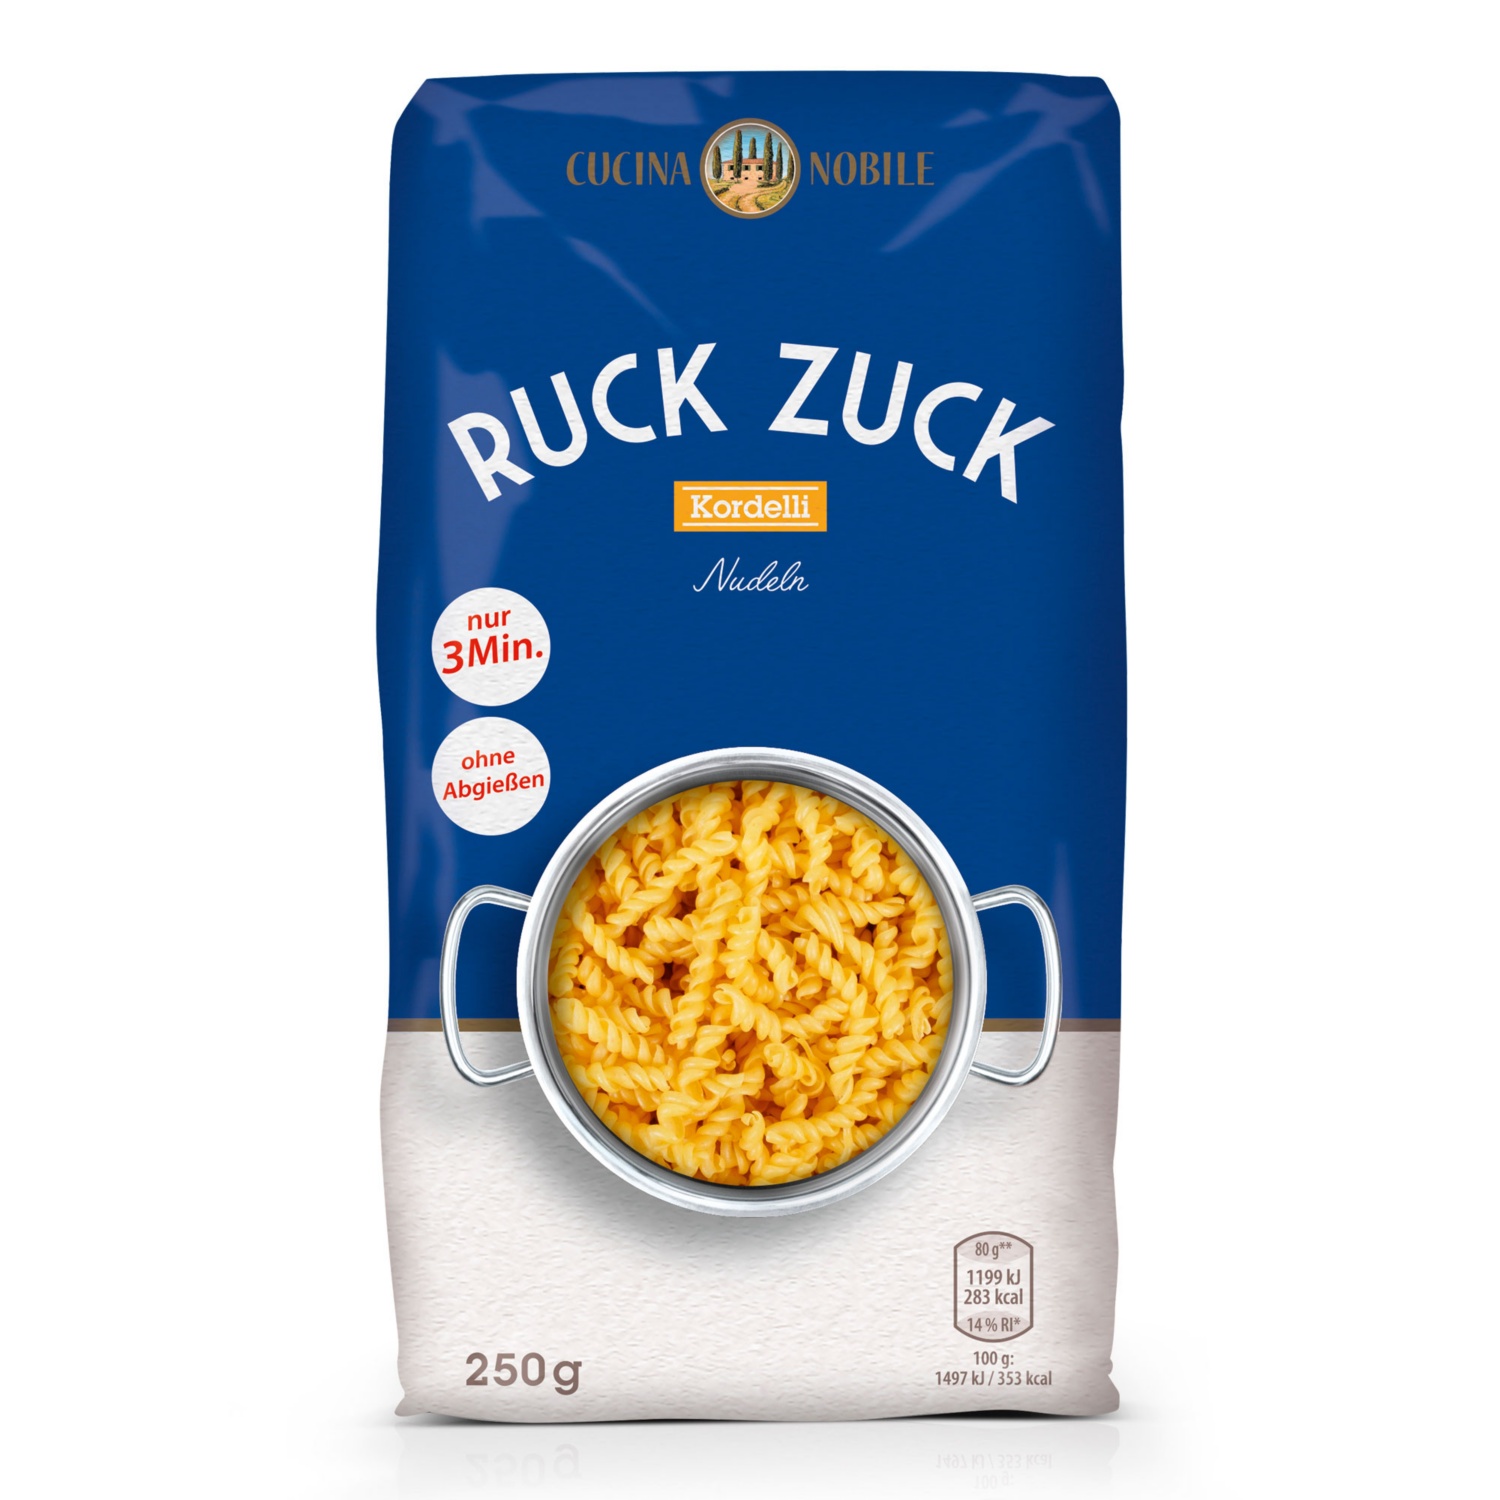 Ruck-Zuck-Nudeln, Kordelli